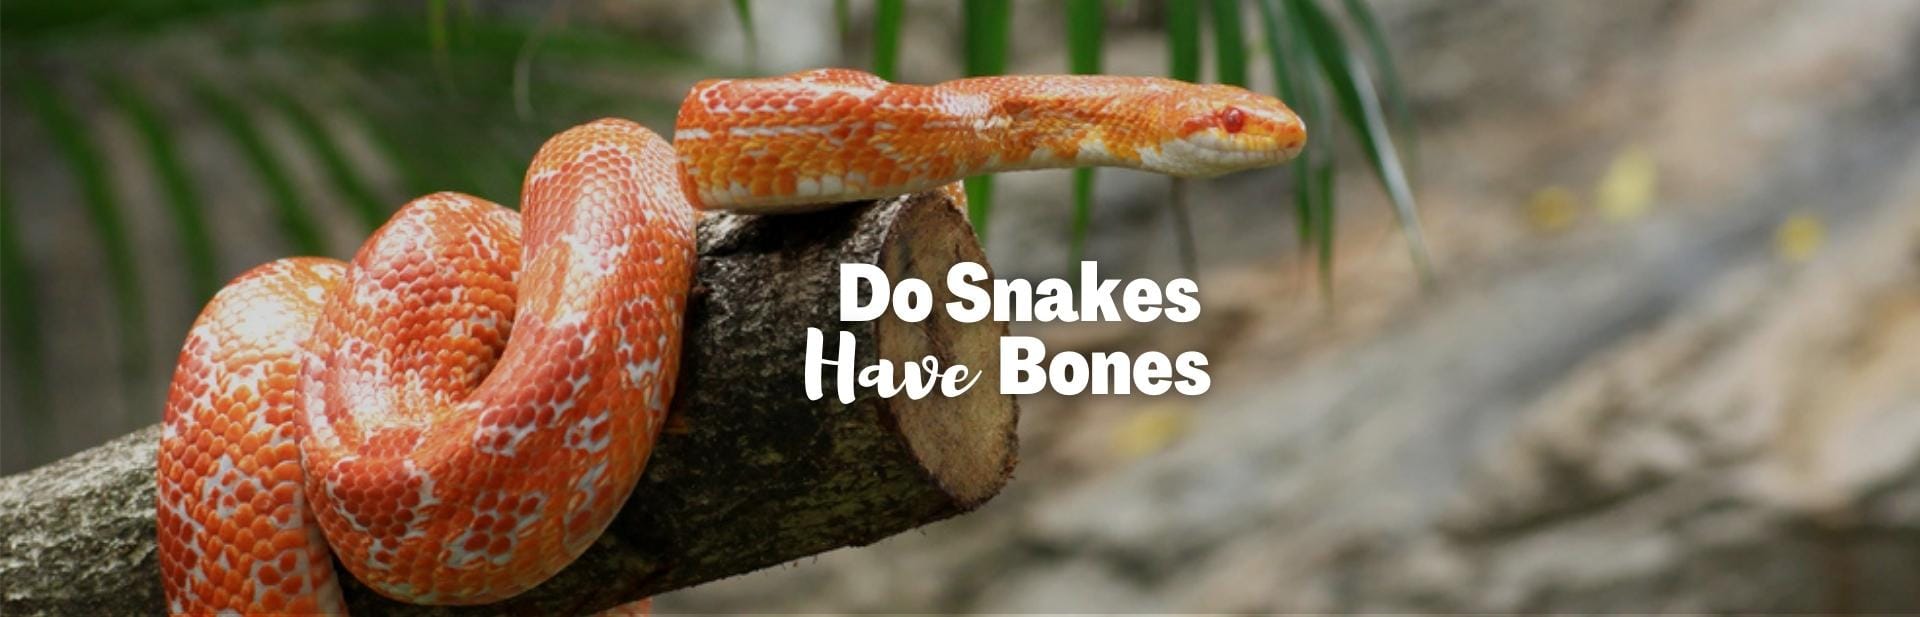 Do Snakes Have Bones? Flexible Danger Noodles and Their Spectacular Skeletons